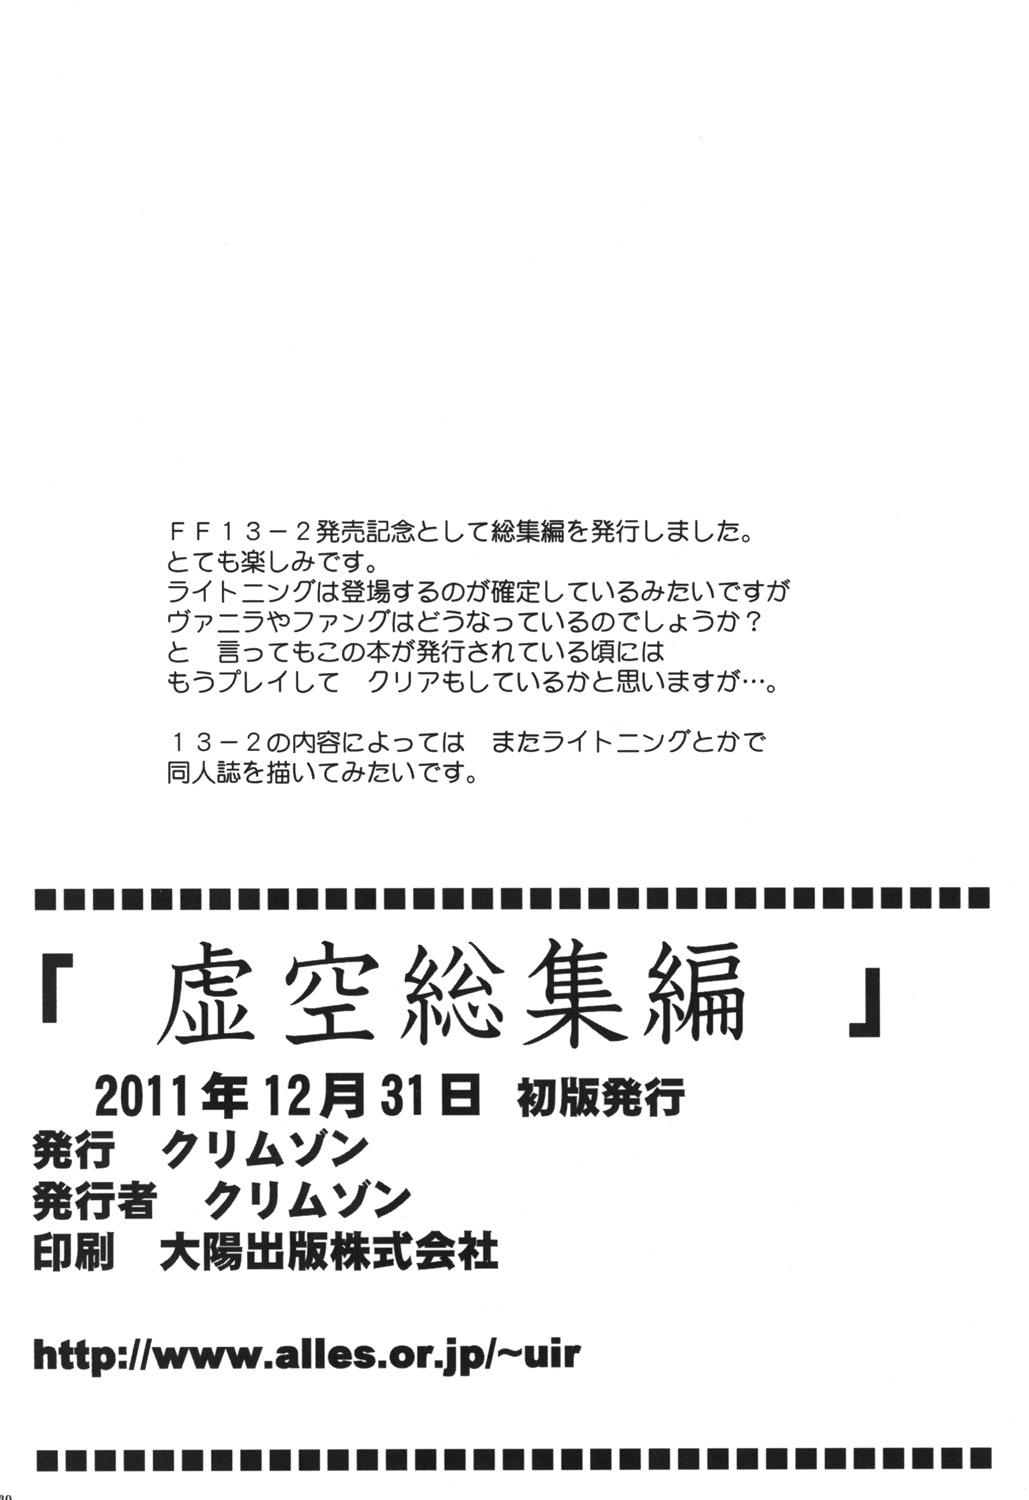 First Time Watashi wa Kaware te i ta - Final fantasy xiii Gay Blackhair - Page 46